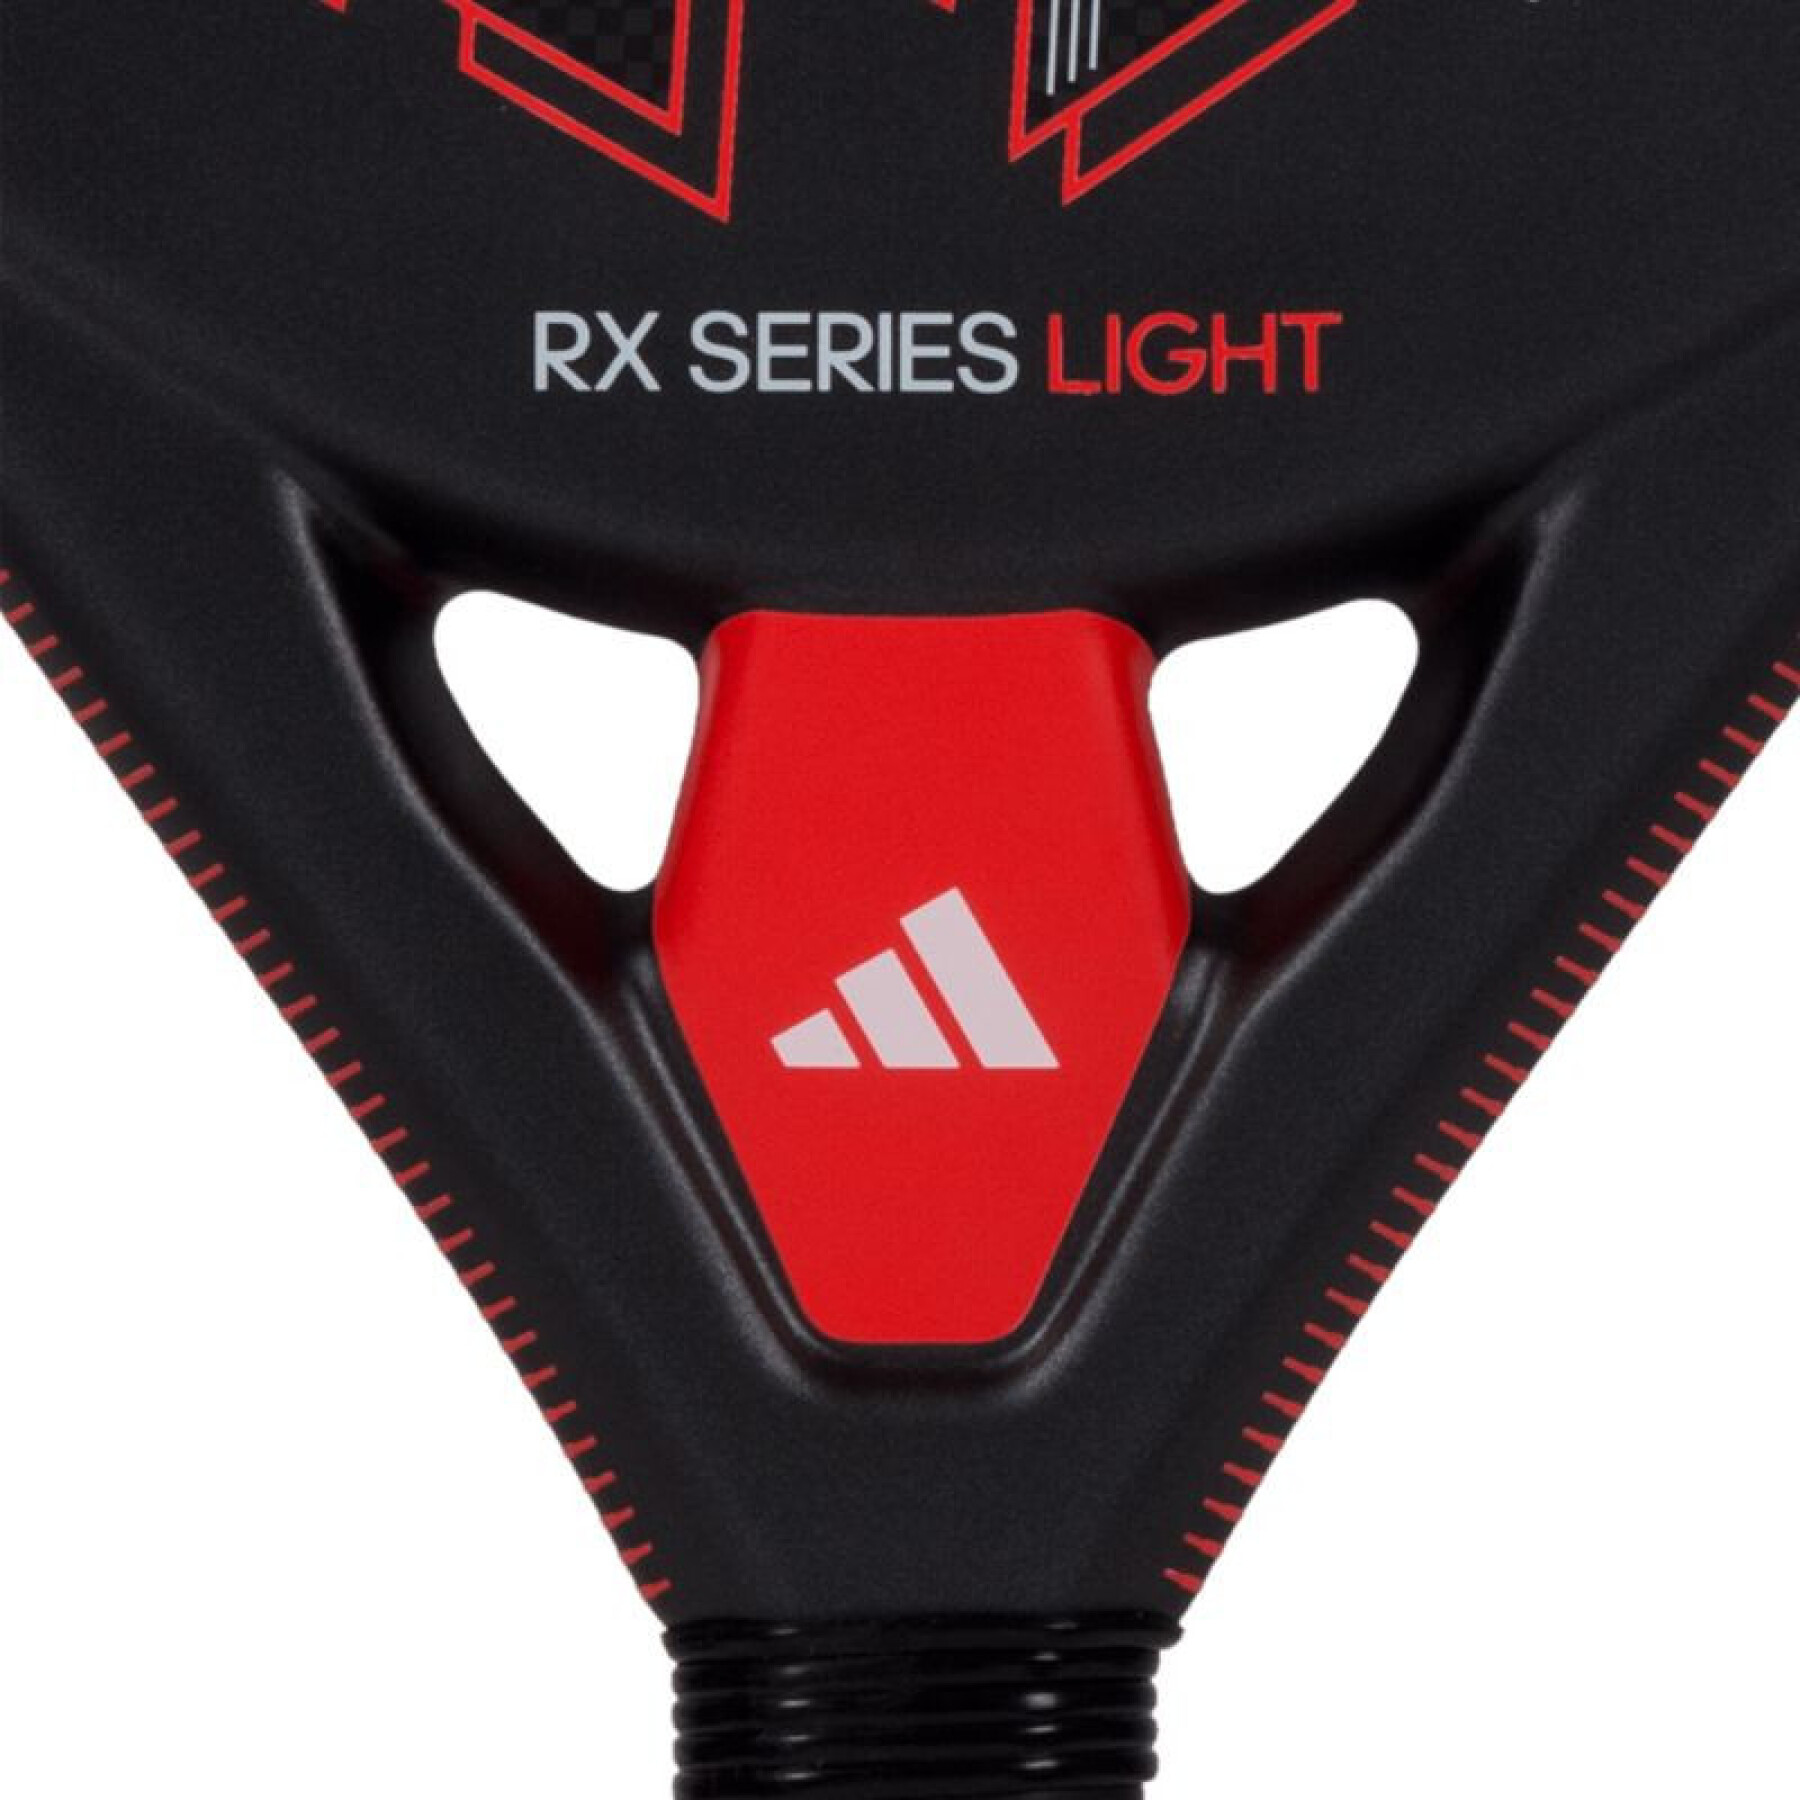 Padel rackets adidas Rx Series Light